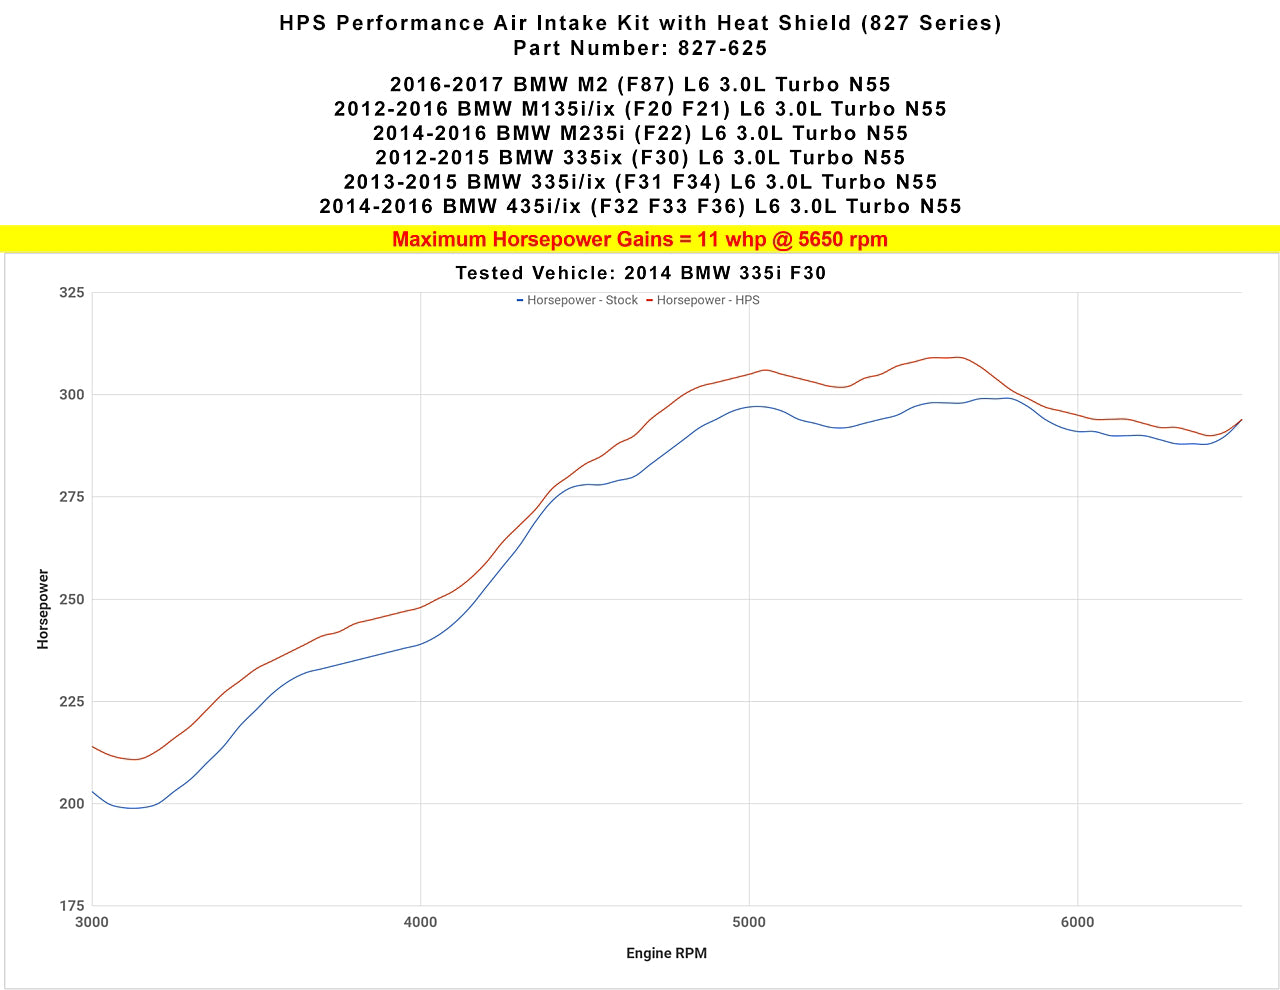 Dyno proven gains 11 whp HPS Performance Shortram Air Intake Kit 2012-2015 BMW 335ix F30 3.0L Turbo N55 827-625WB